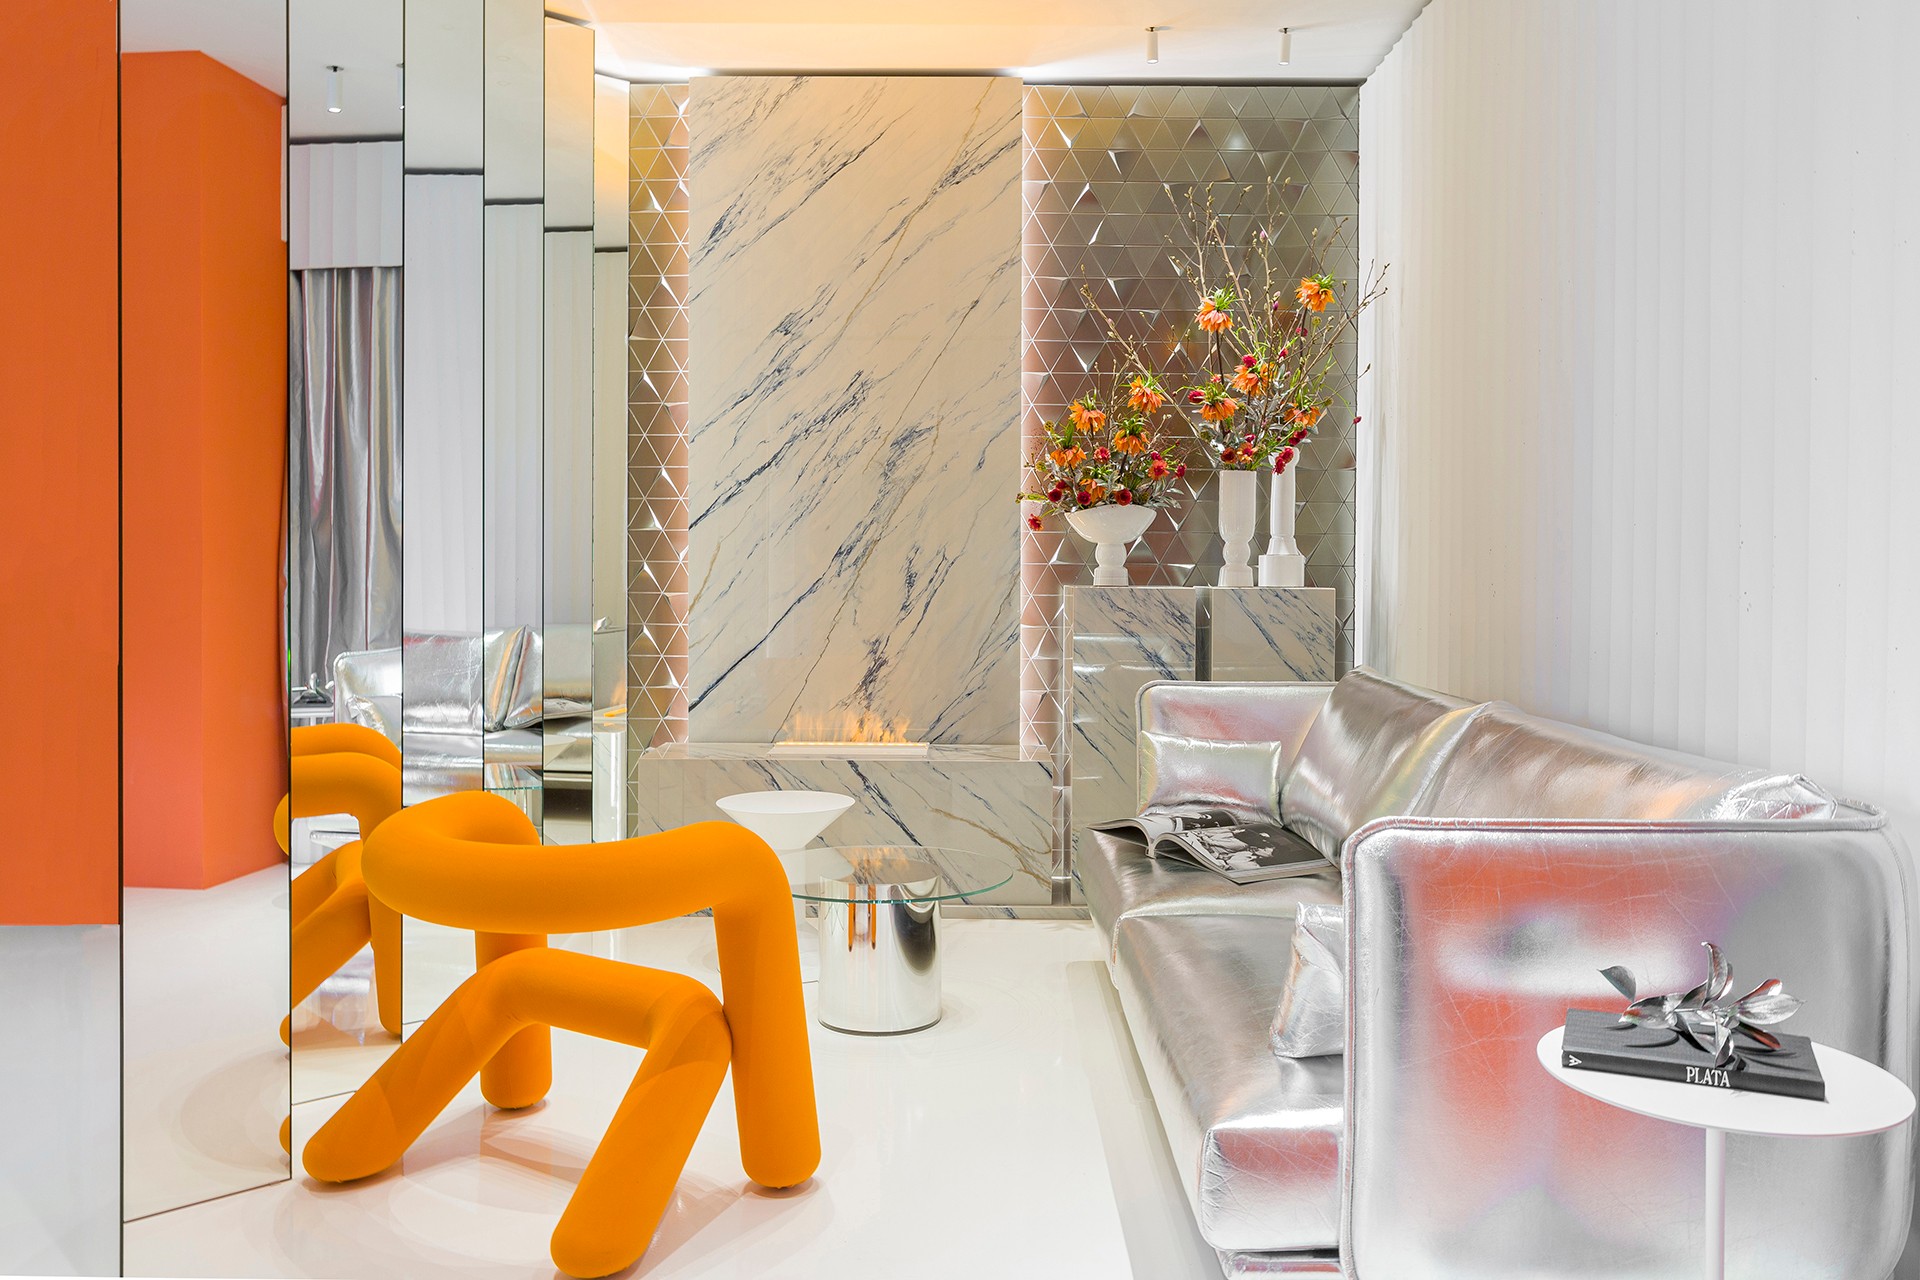 Image of 22. casa decor 2022 espacio sinmas studio salon Bajas1 in A contemporary public toilet design inspired by Roman public baths - Cosentino